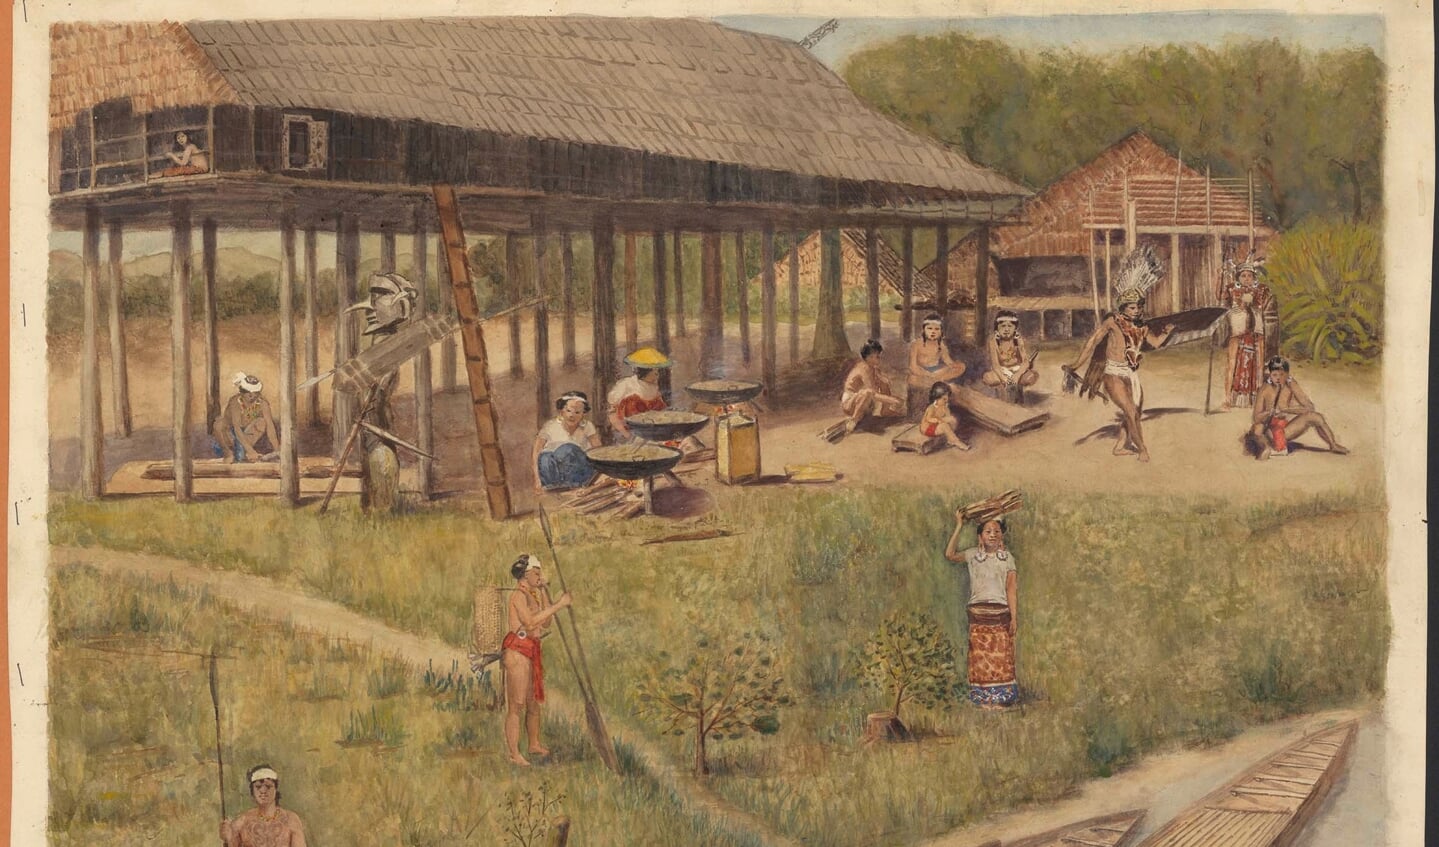 ‘Groot Dajaksch huis op Borneo’, 1915, W.J. Isings (1858-1938). Serie: Insulinde in woord en beeld. Uitgeverij J.B. Wolters Groningen/Den Haag.